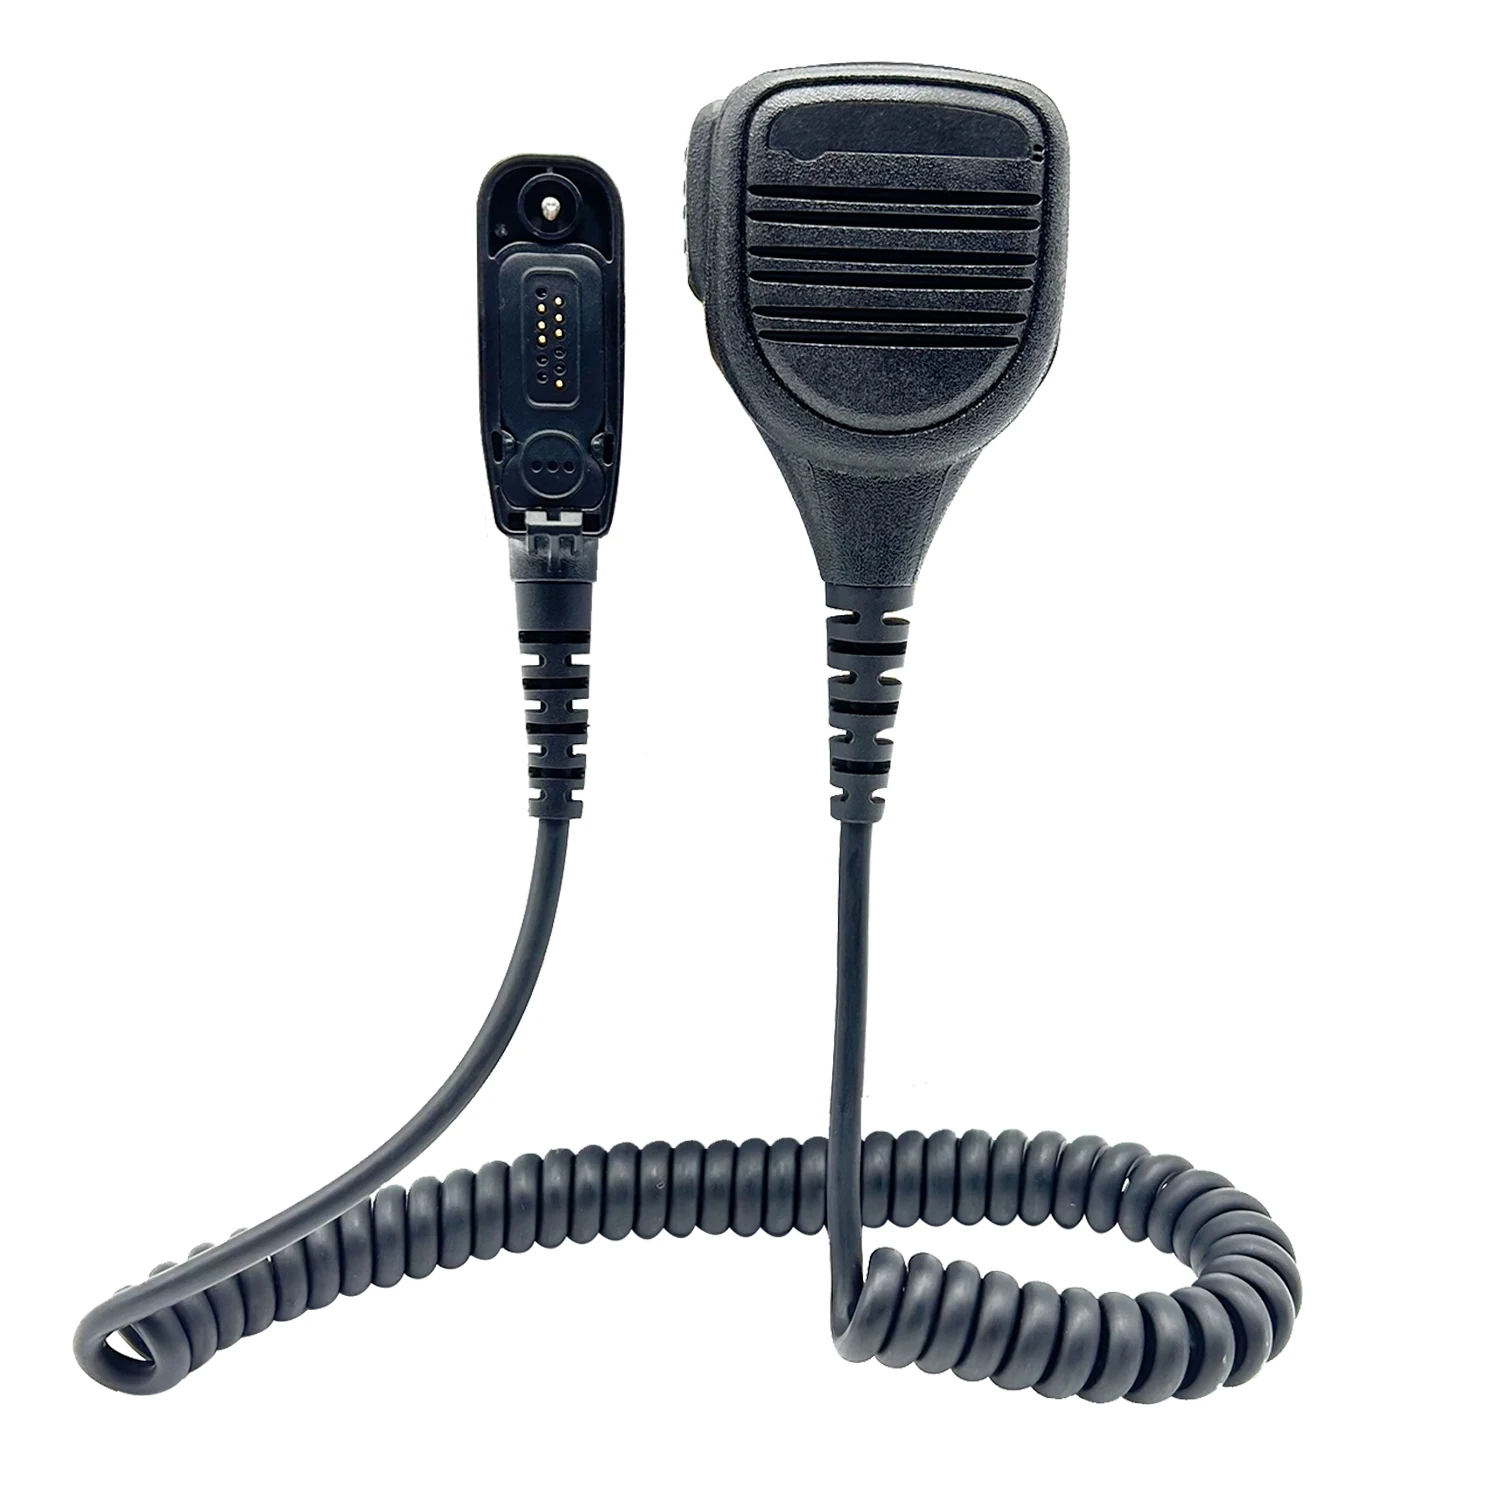 Walkie Talkie Remote Speaker Microphone Mic For XPR6350 XPR6550 XPR7550 APX7000 DP3400 DP3401 Handheld Radio walkie talkie remote speaker microphone mic for xpr6350 xpr6550 xpr7550 apx7000 dp3400 dp3401 handheld radio